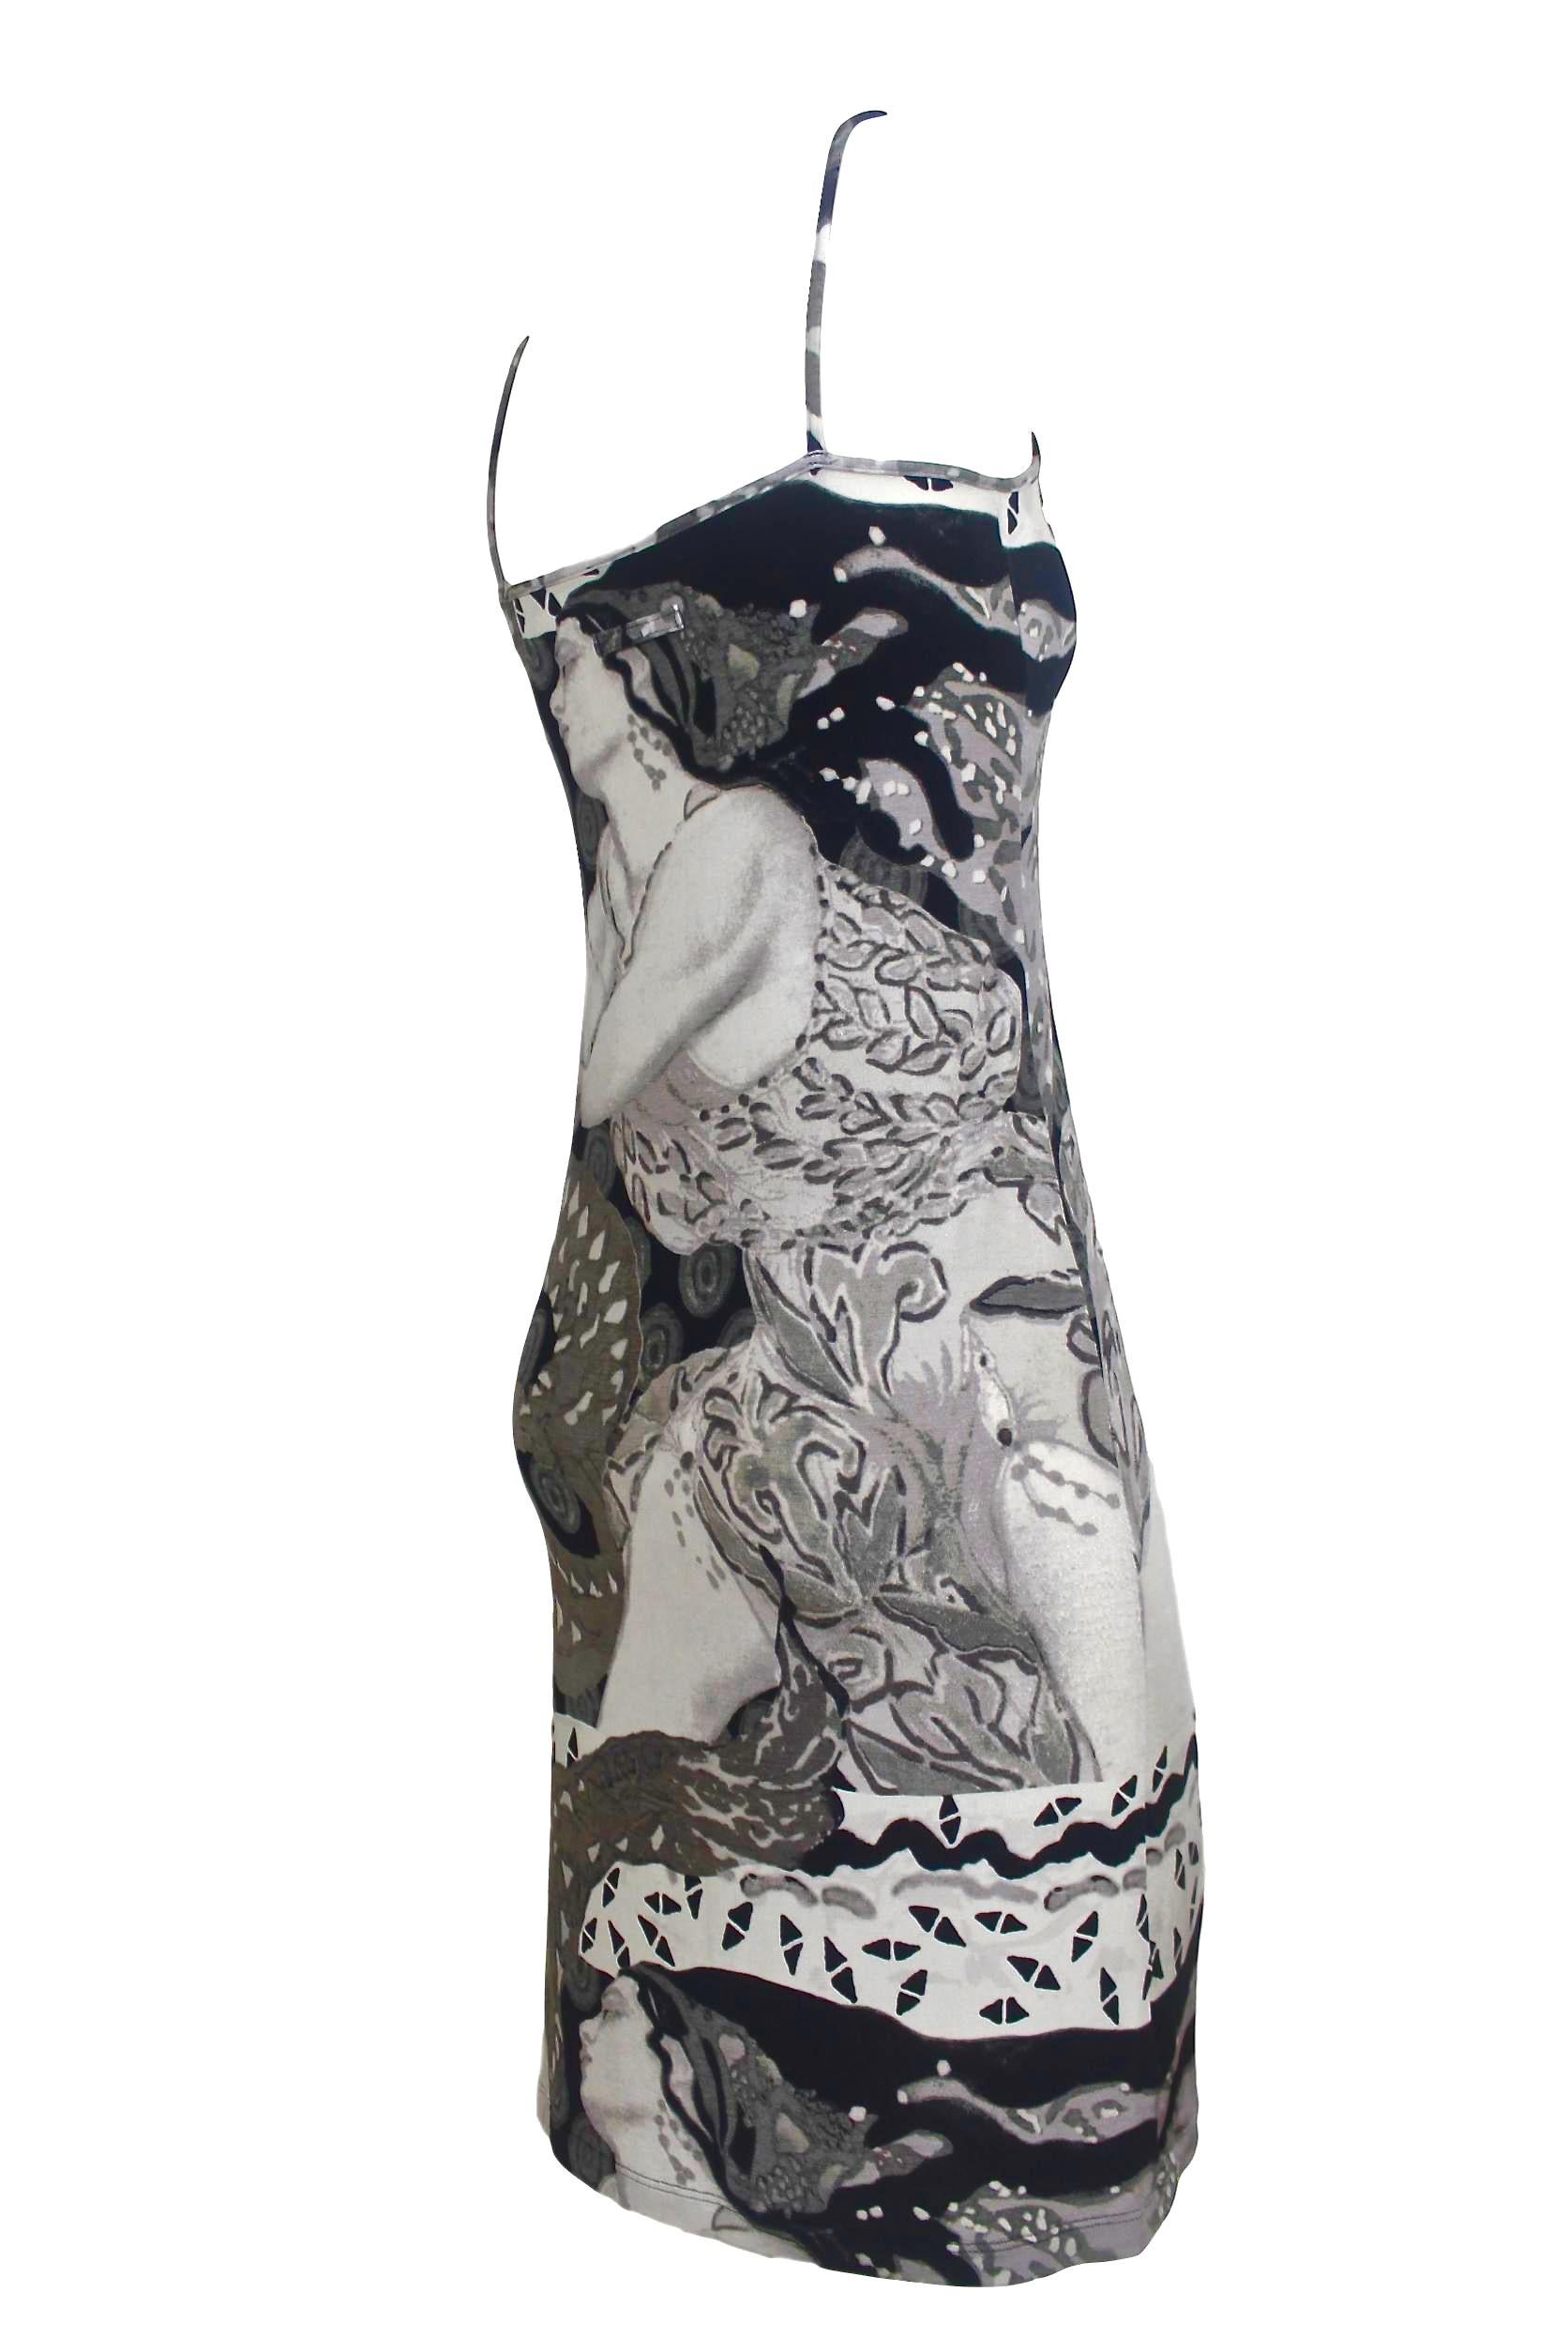 Jean paul Gaultier 'Erte' Print Summer Slip Dress For Sale 8